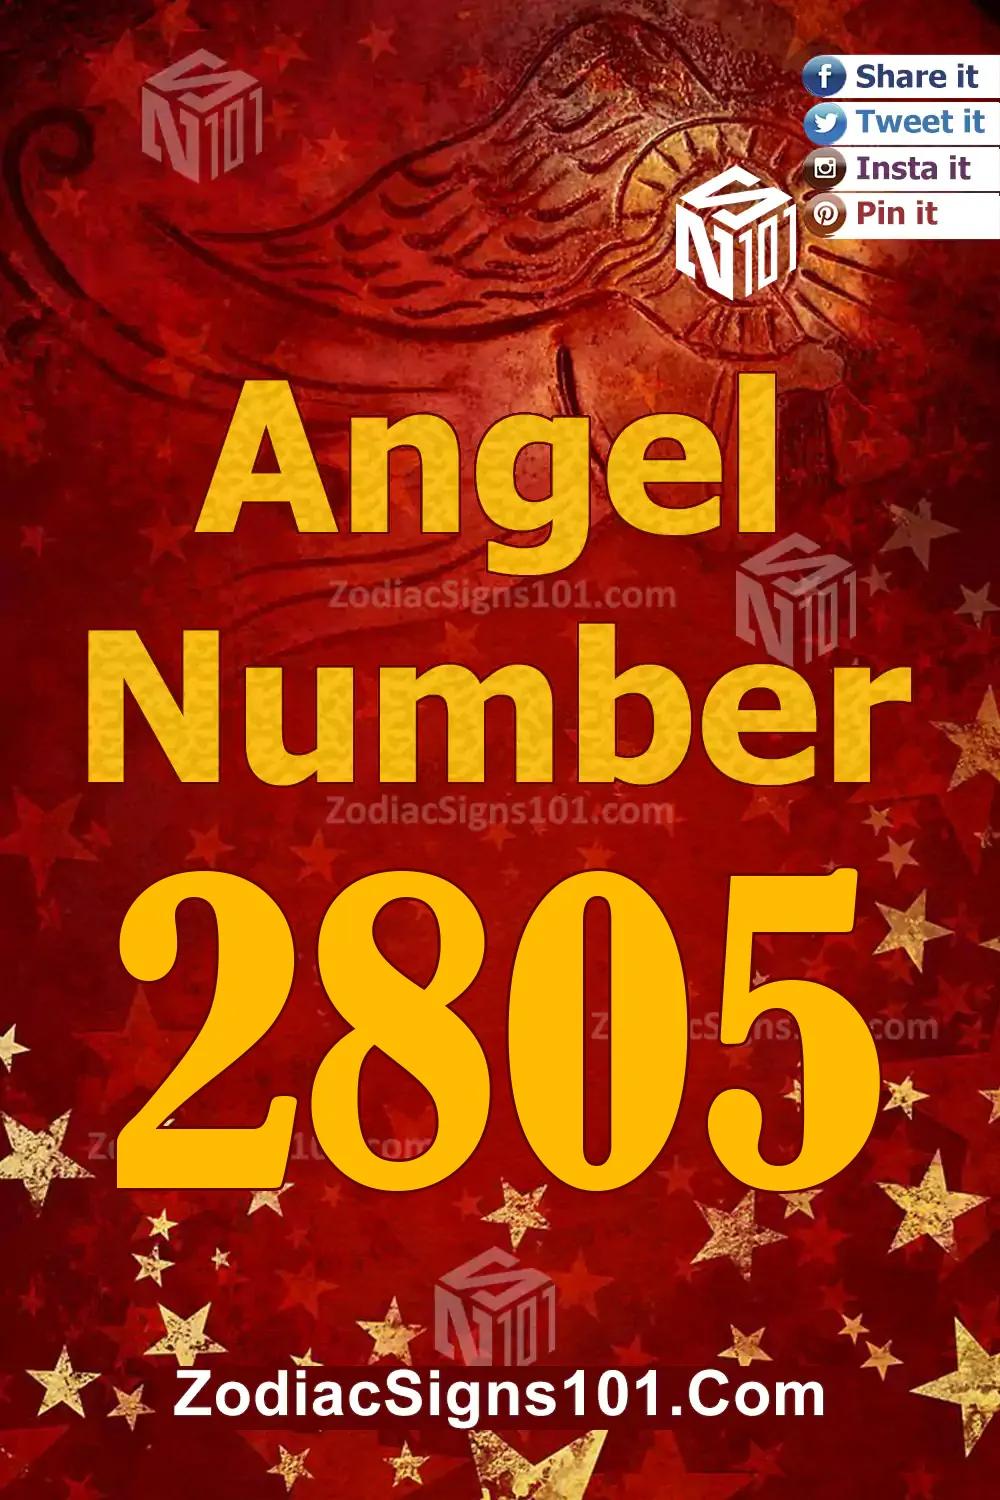 2805-Angel-Number-Meaning.jpg